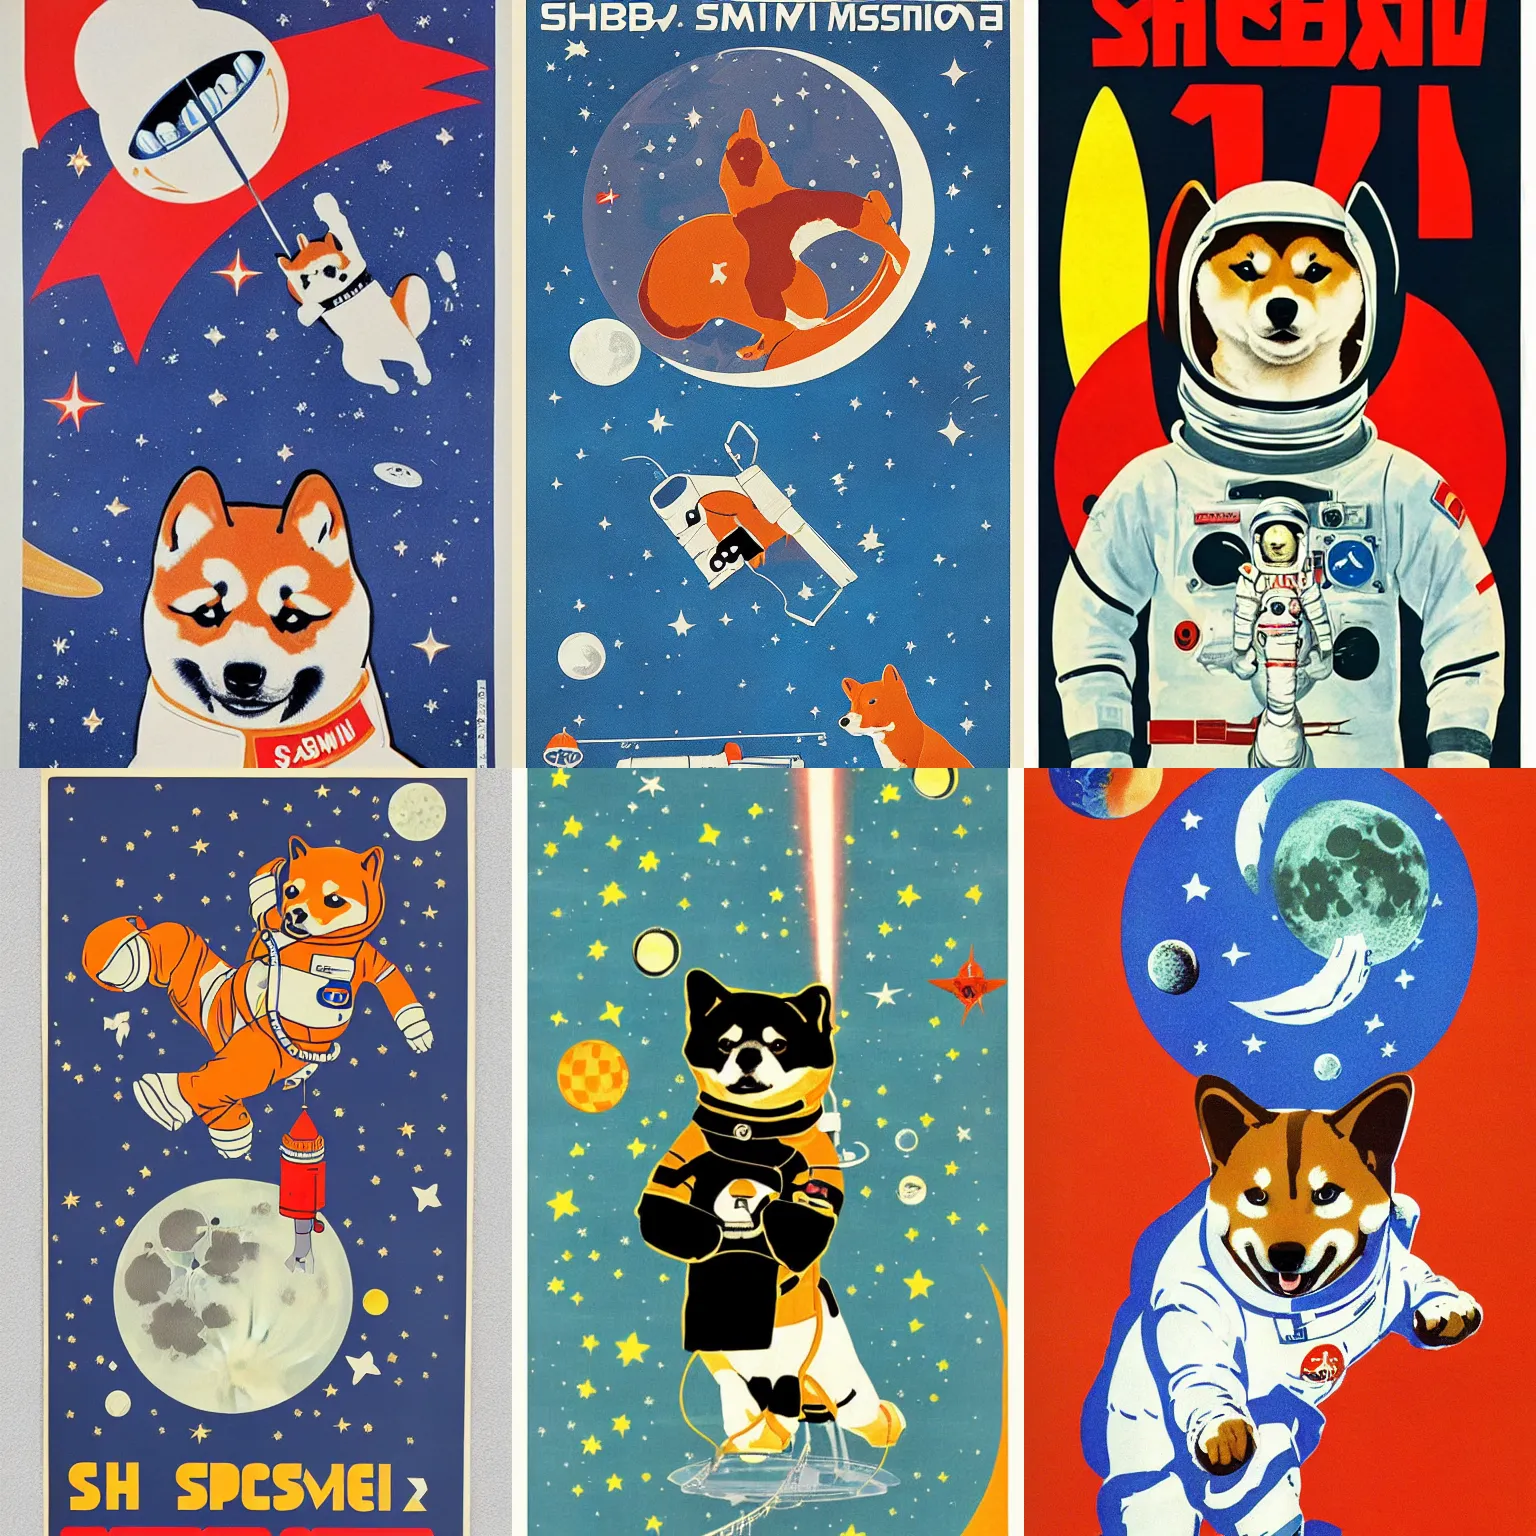 Prompt: Shiba Inu cosmonaut, moon mission, 60s poster, 1968 Soviet